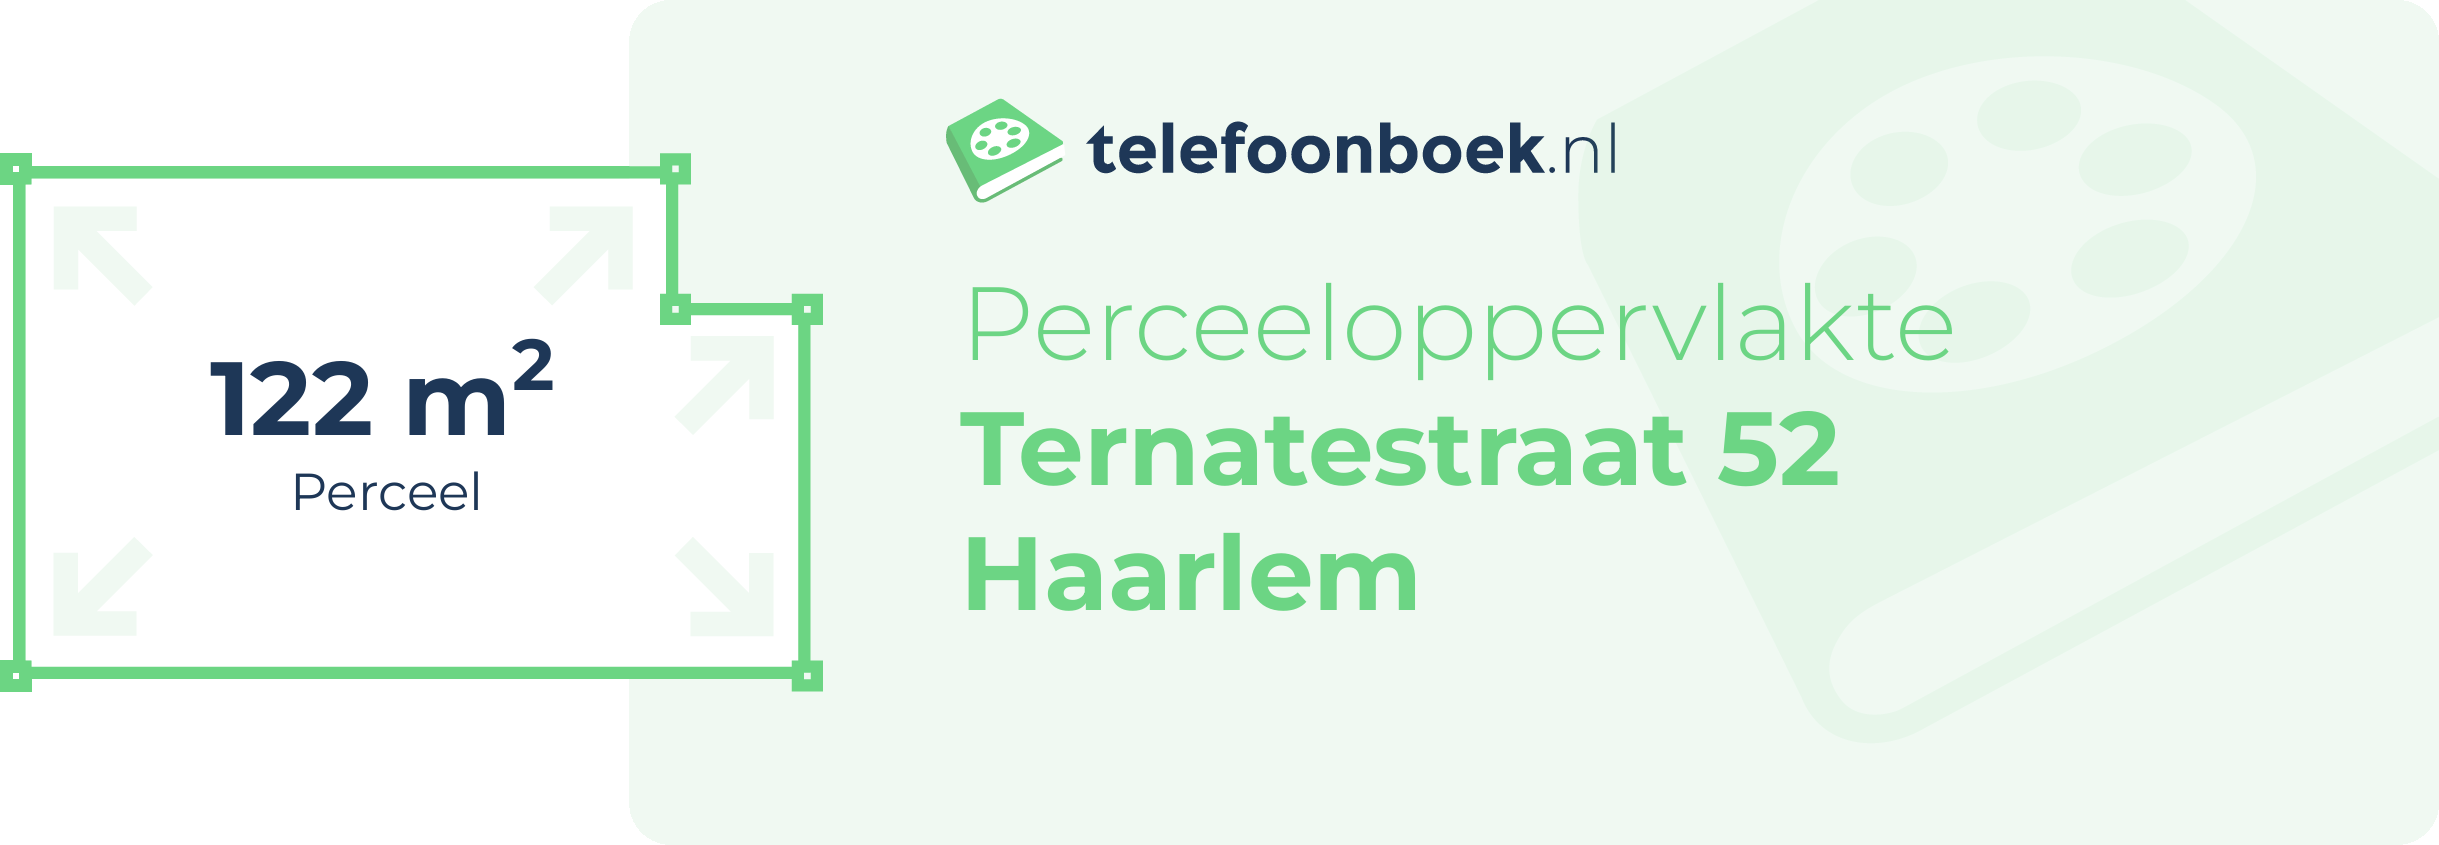 Perceeloppervlakte Ternatestraat 52 Haarlem